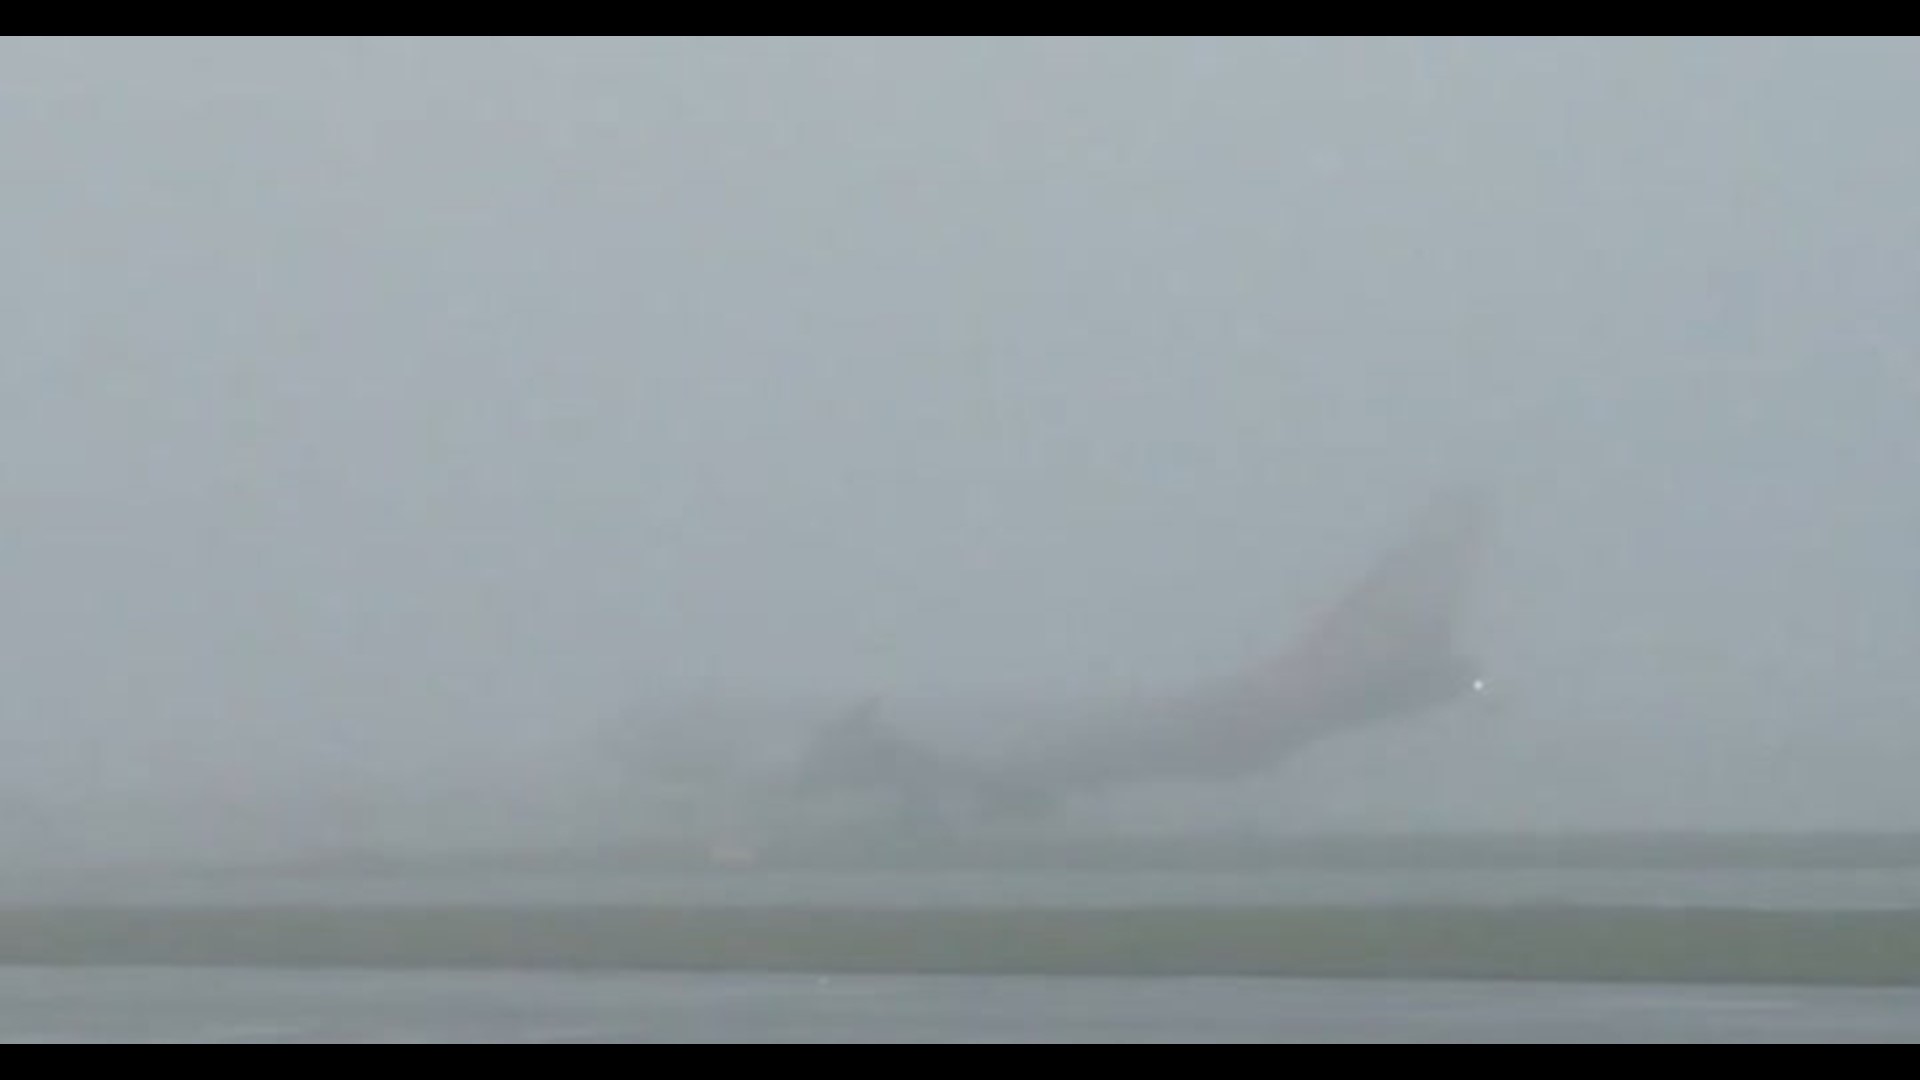 Dense fog in Atlanta, Georgia, seemingly made this plane disappear from the runway at Hartsfield-Jackson Atlanta International Airport as it departed on May 28.